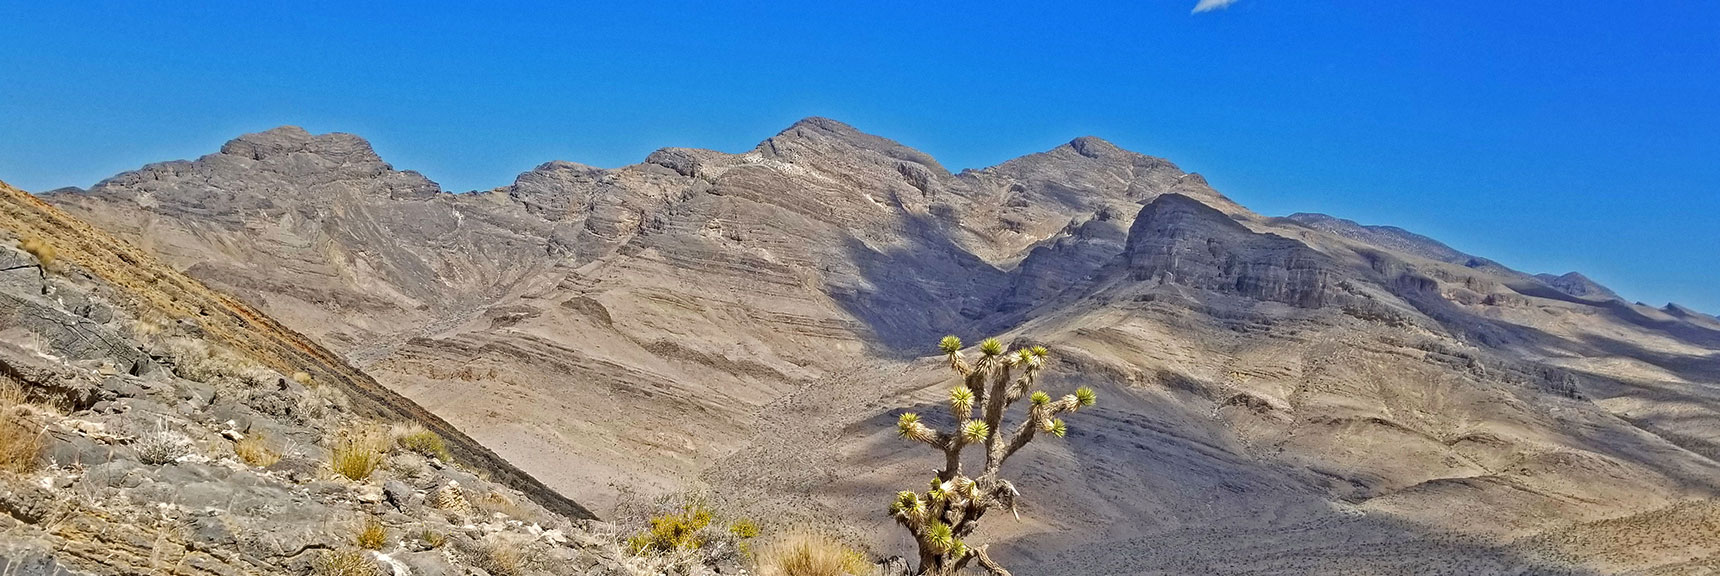 Near Fossil Ridge Summit, View of Southern Sheep Range | Fossil Ridge End to End | Sheep Range | Desert National Wildlife Refuge, Nevada